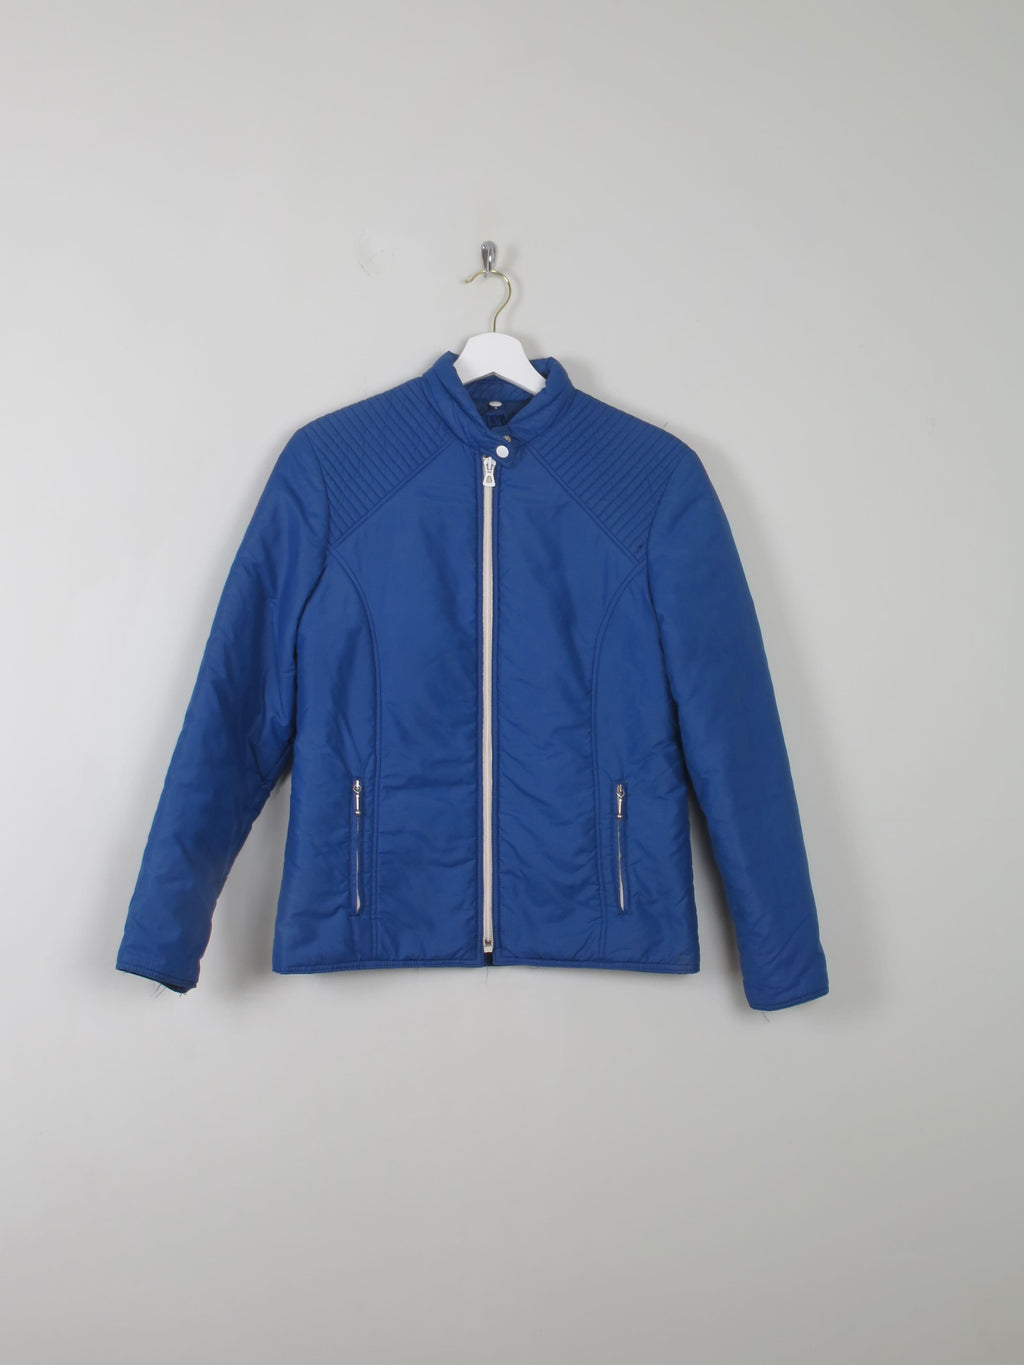 Women’s Blue Vintage Racing Style Ski Jacket S - The Harlequin